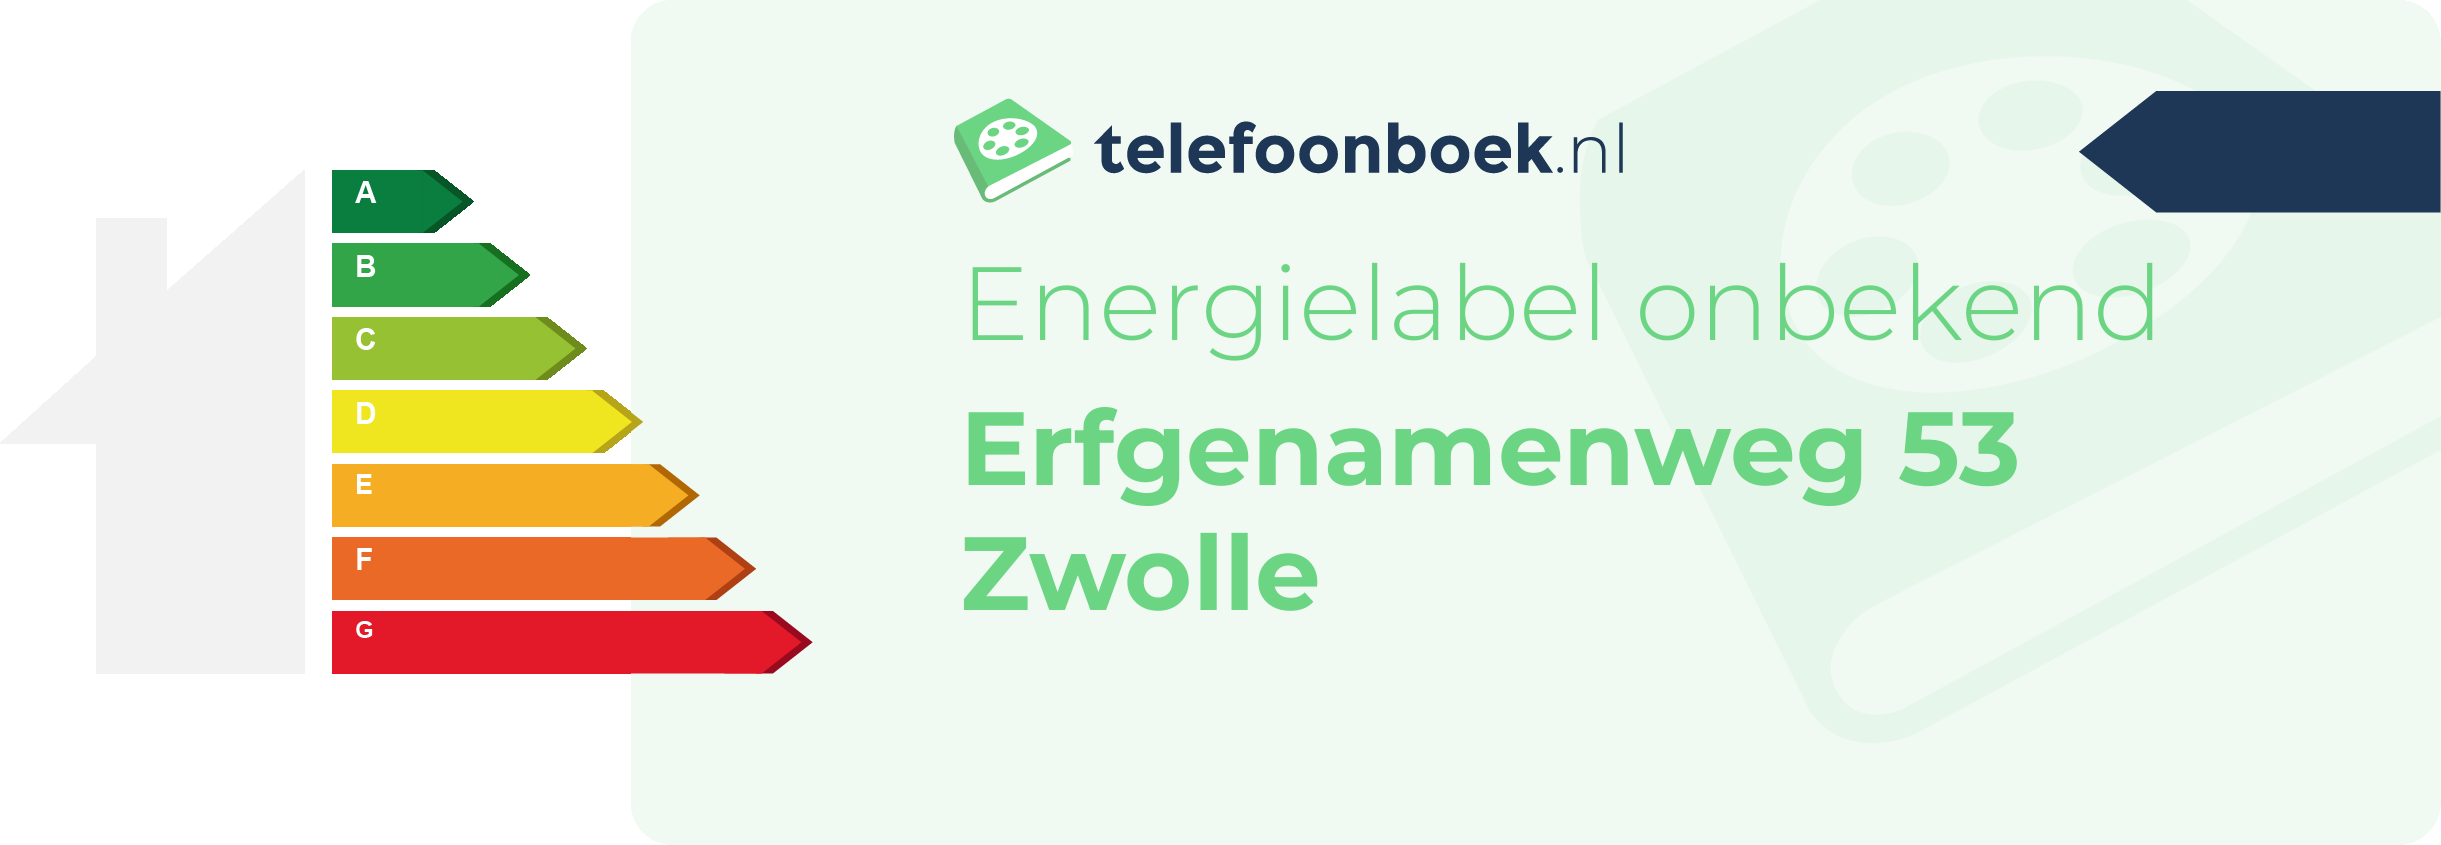 Energielabel Erfgenamenweg 53 Zwolle